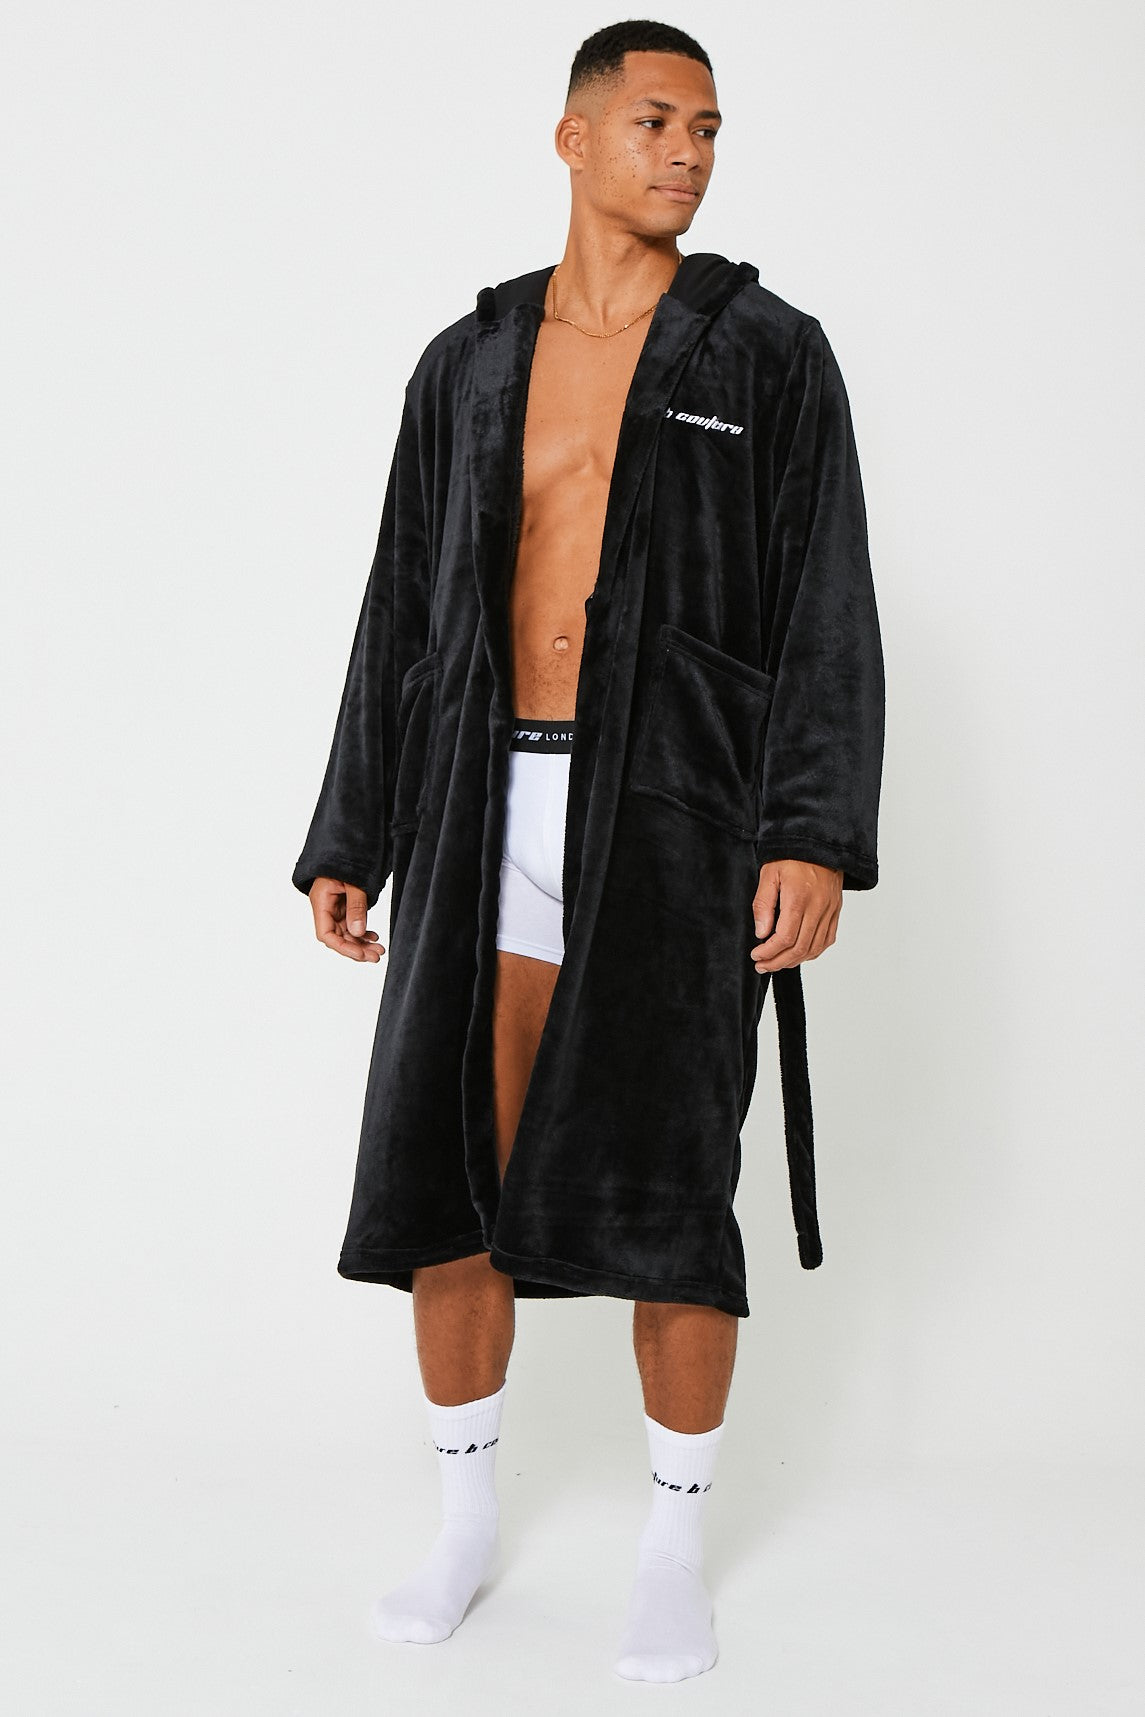 Mens Black/Grey Oversized Hoodie Fleece Hooded Blanket Adult Lightweight  Robe | eBay